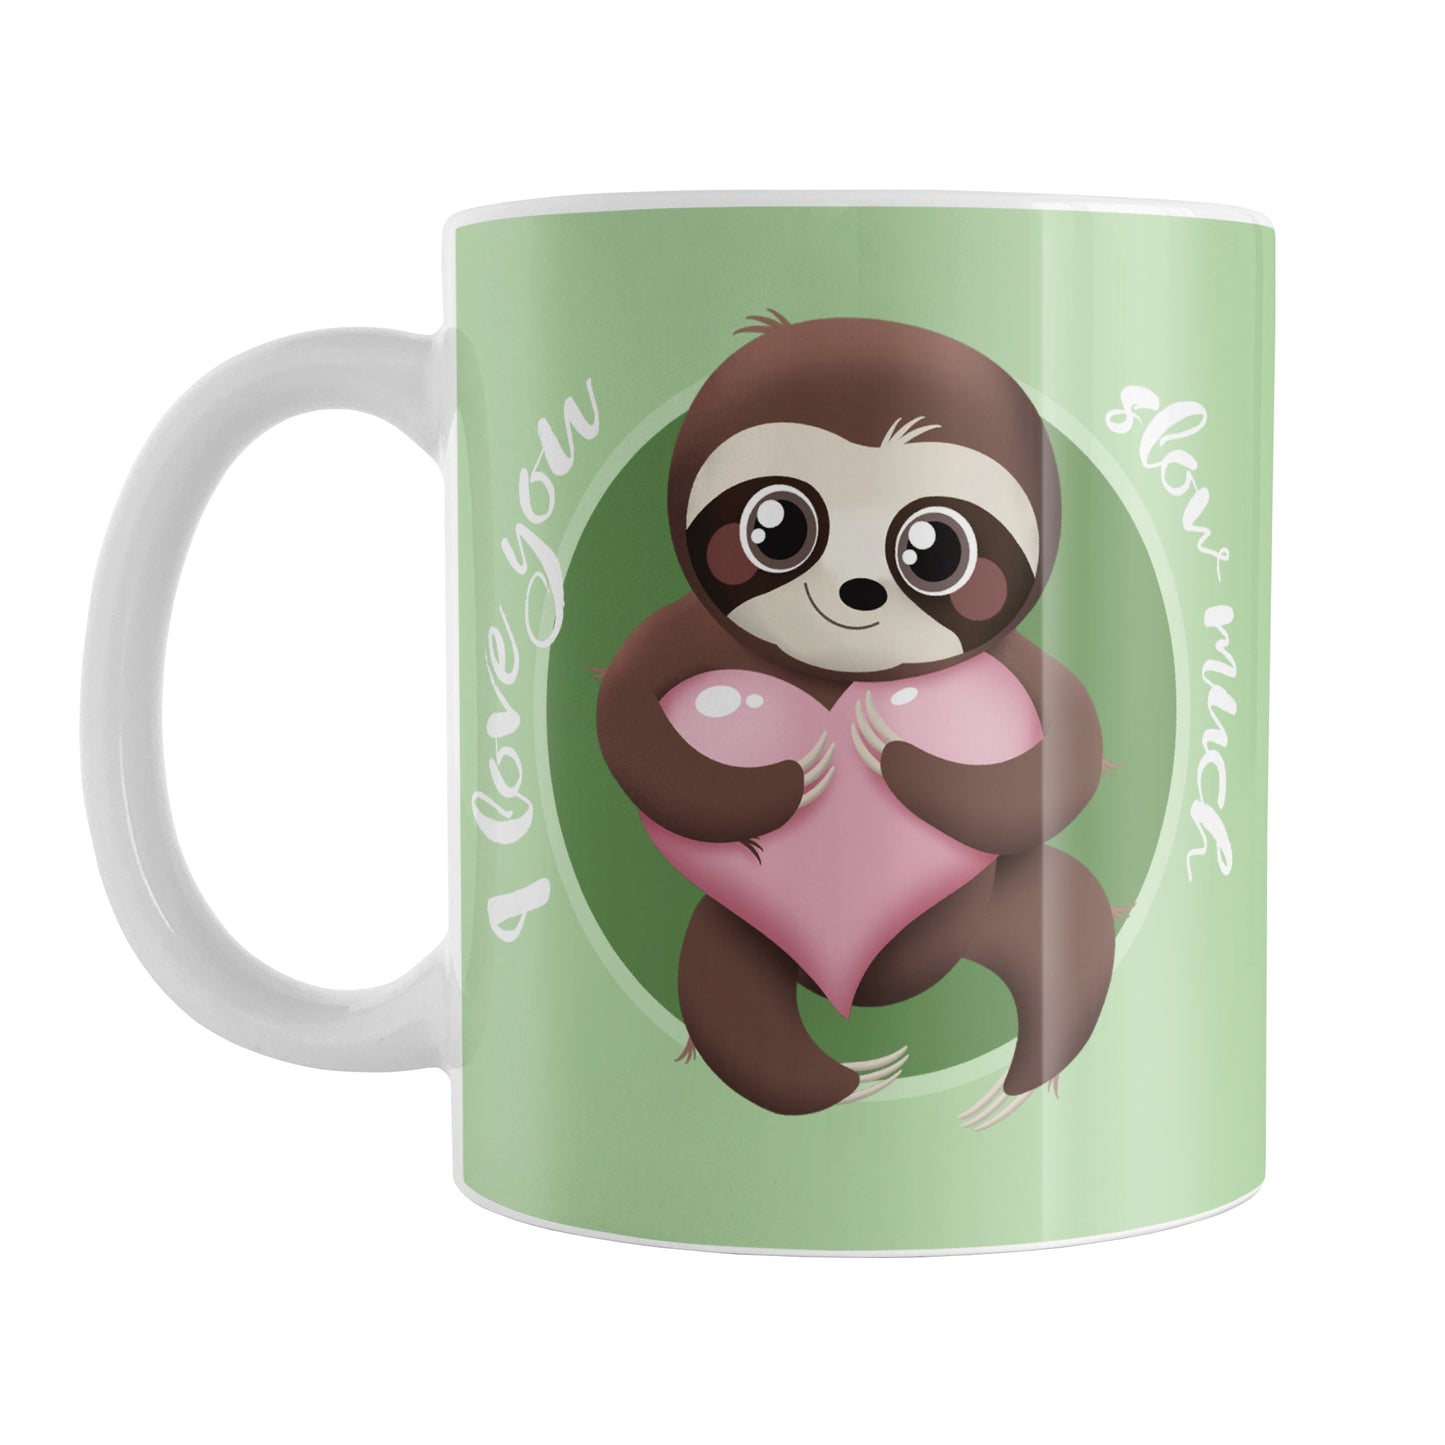 I Love You Slow Much Cute Sloth Mug (11oz) at Amy's Coffee Mugs